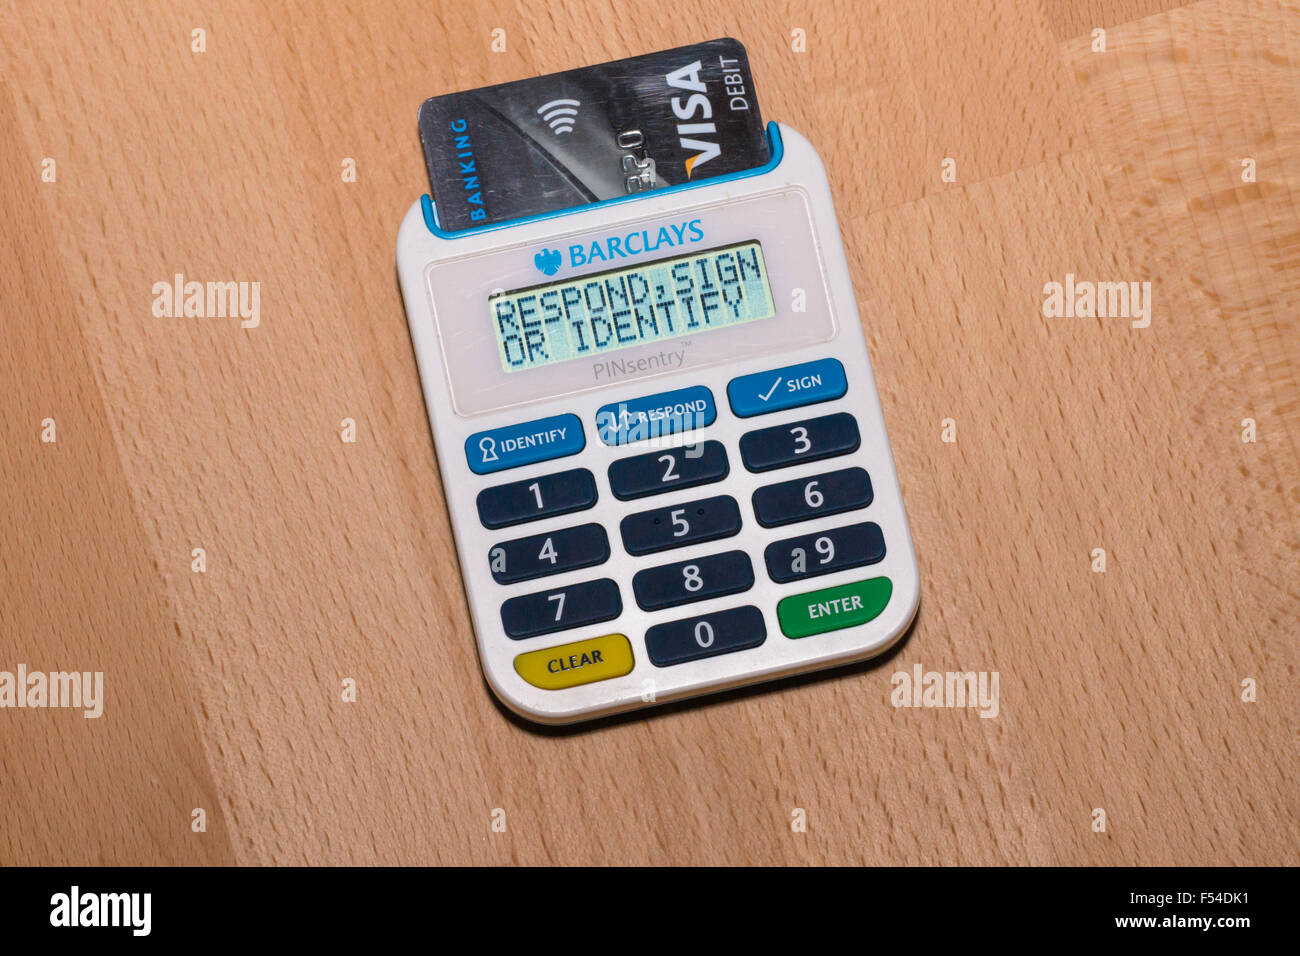 Eine Barclays Bank-Pin-Sentry-Tastatur Stockfoto